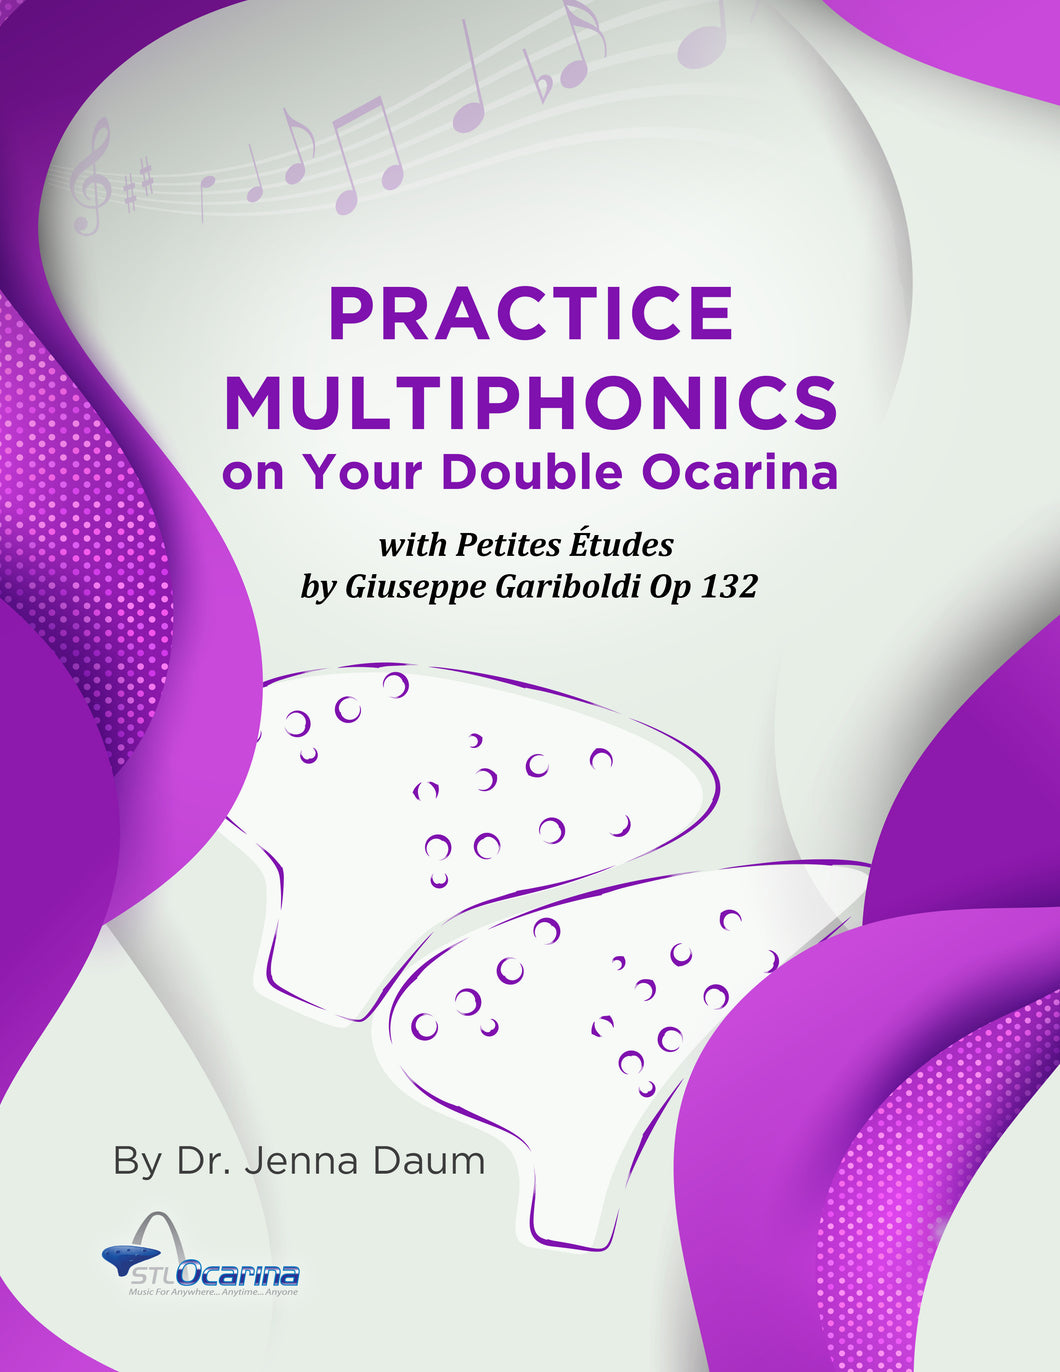 Practice Multiphonics on Your Double Ocarina – with Petites Etudes by Giuseppe Gariboldi